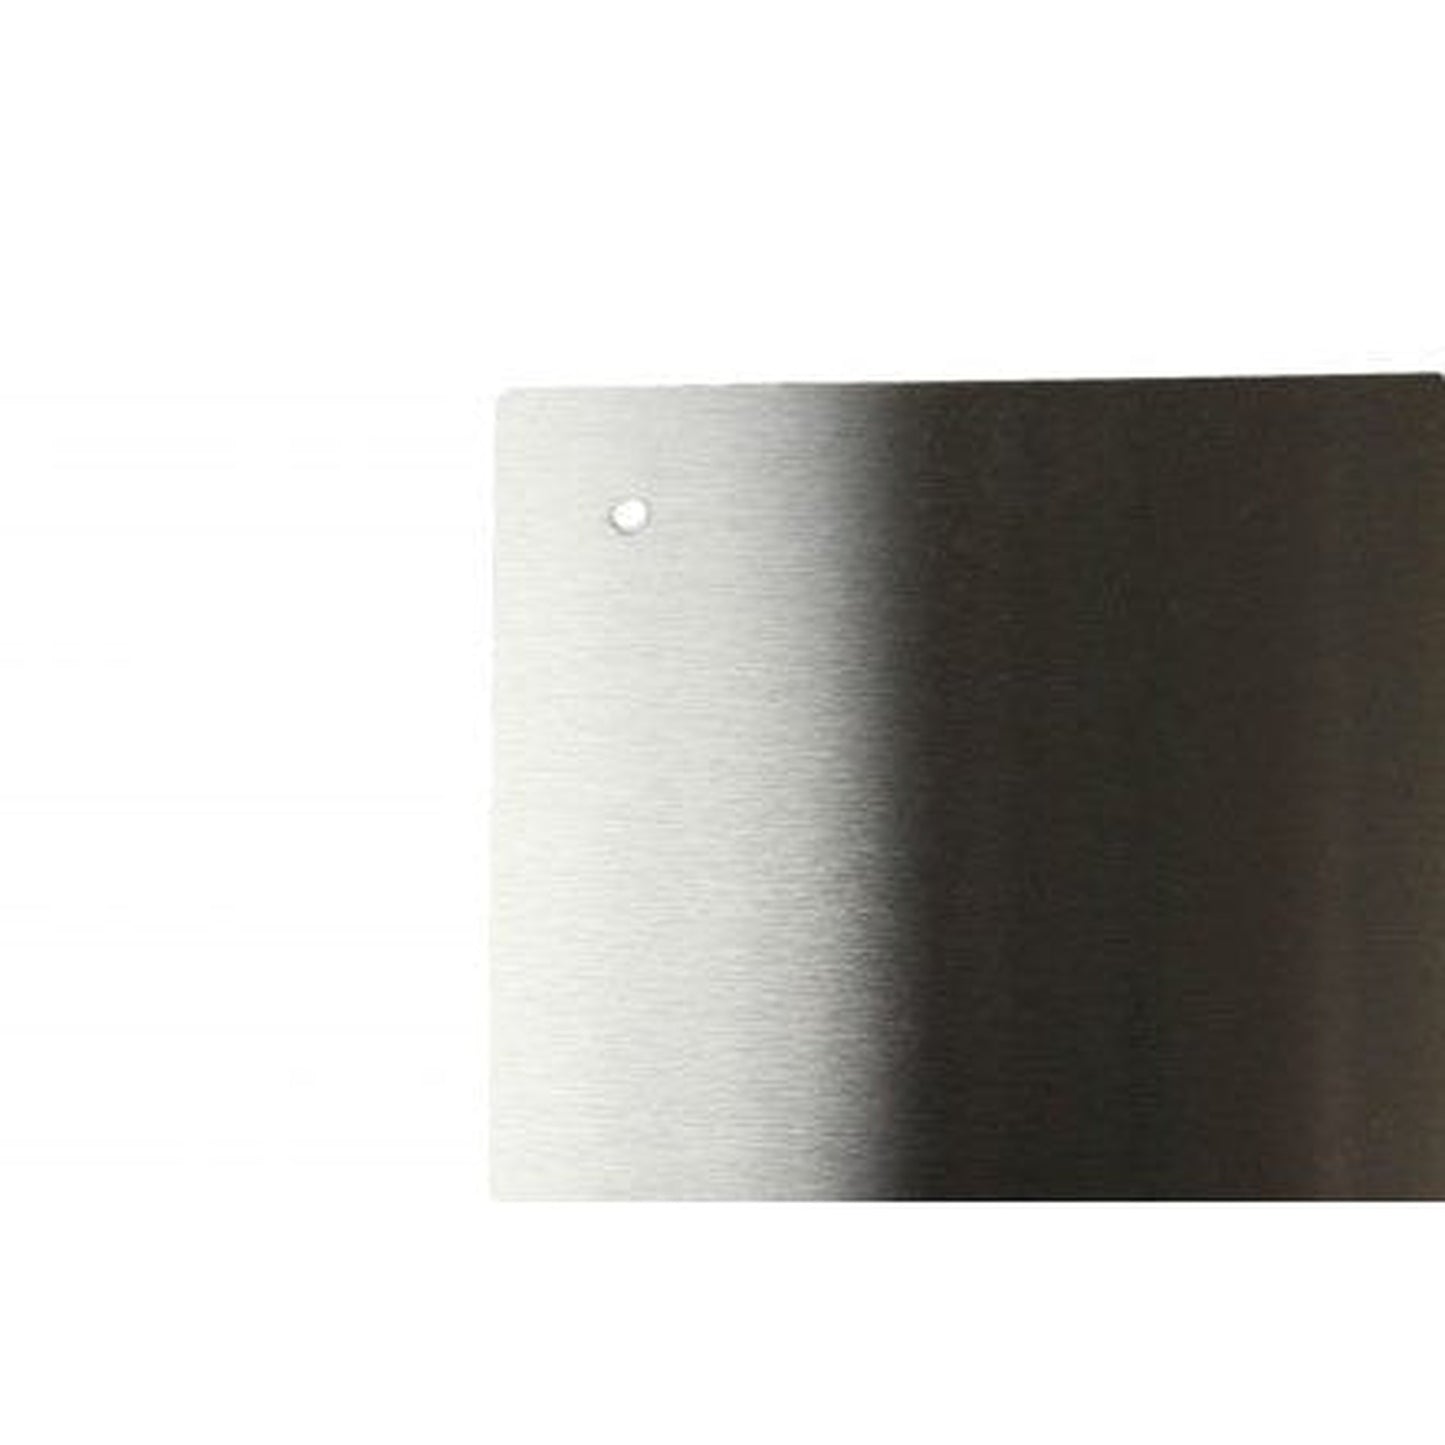 Frost 34 x 0.5 x 10 Stainless Steel Satin Washroom Accessories